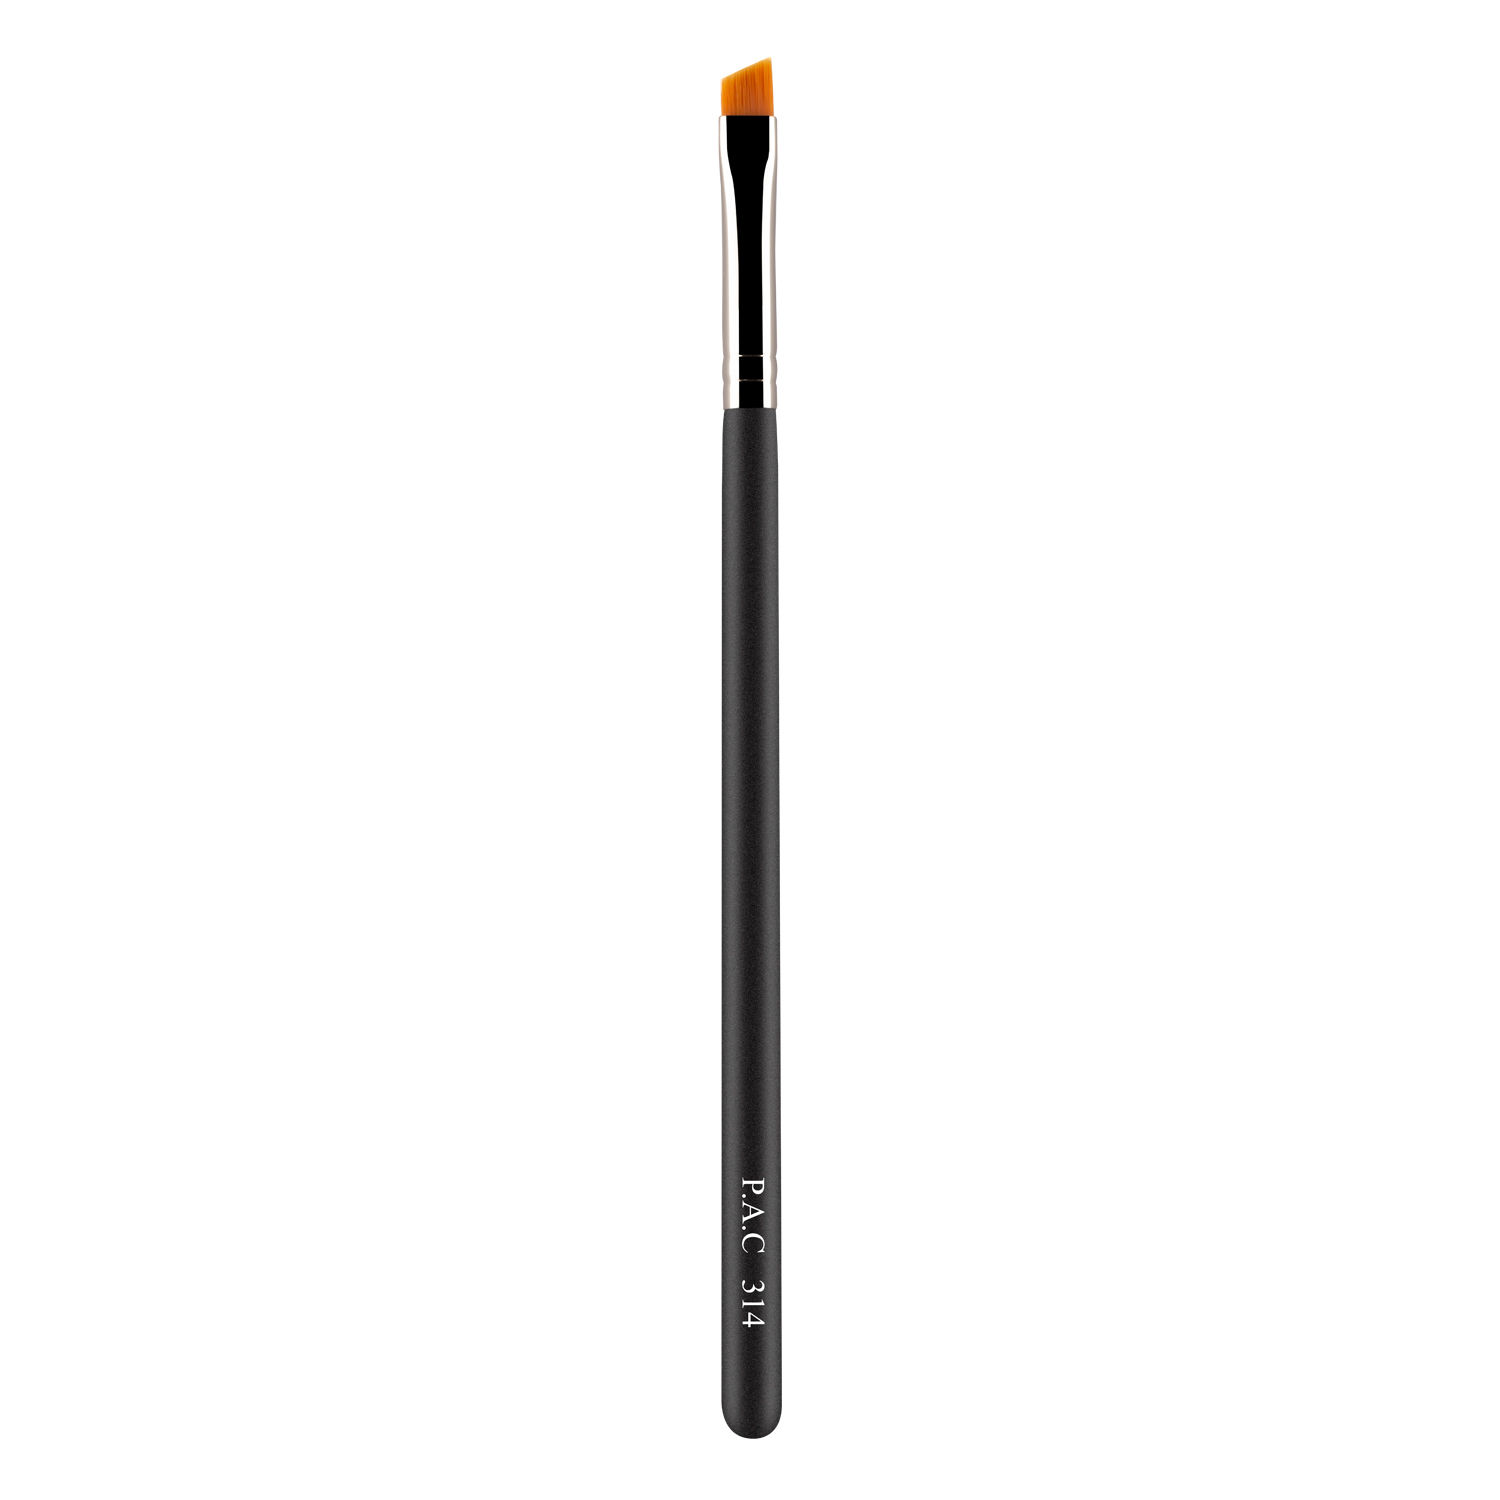 PAC Eyeliner Brush - 314